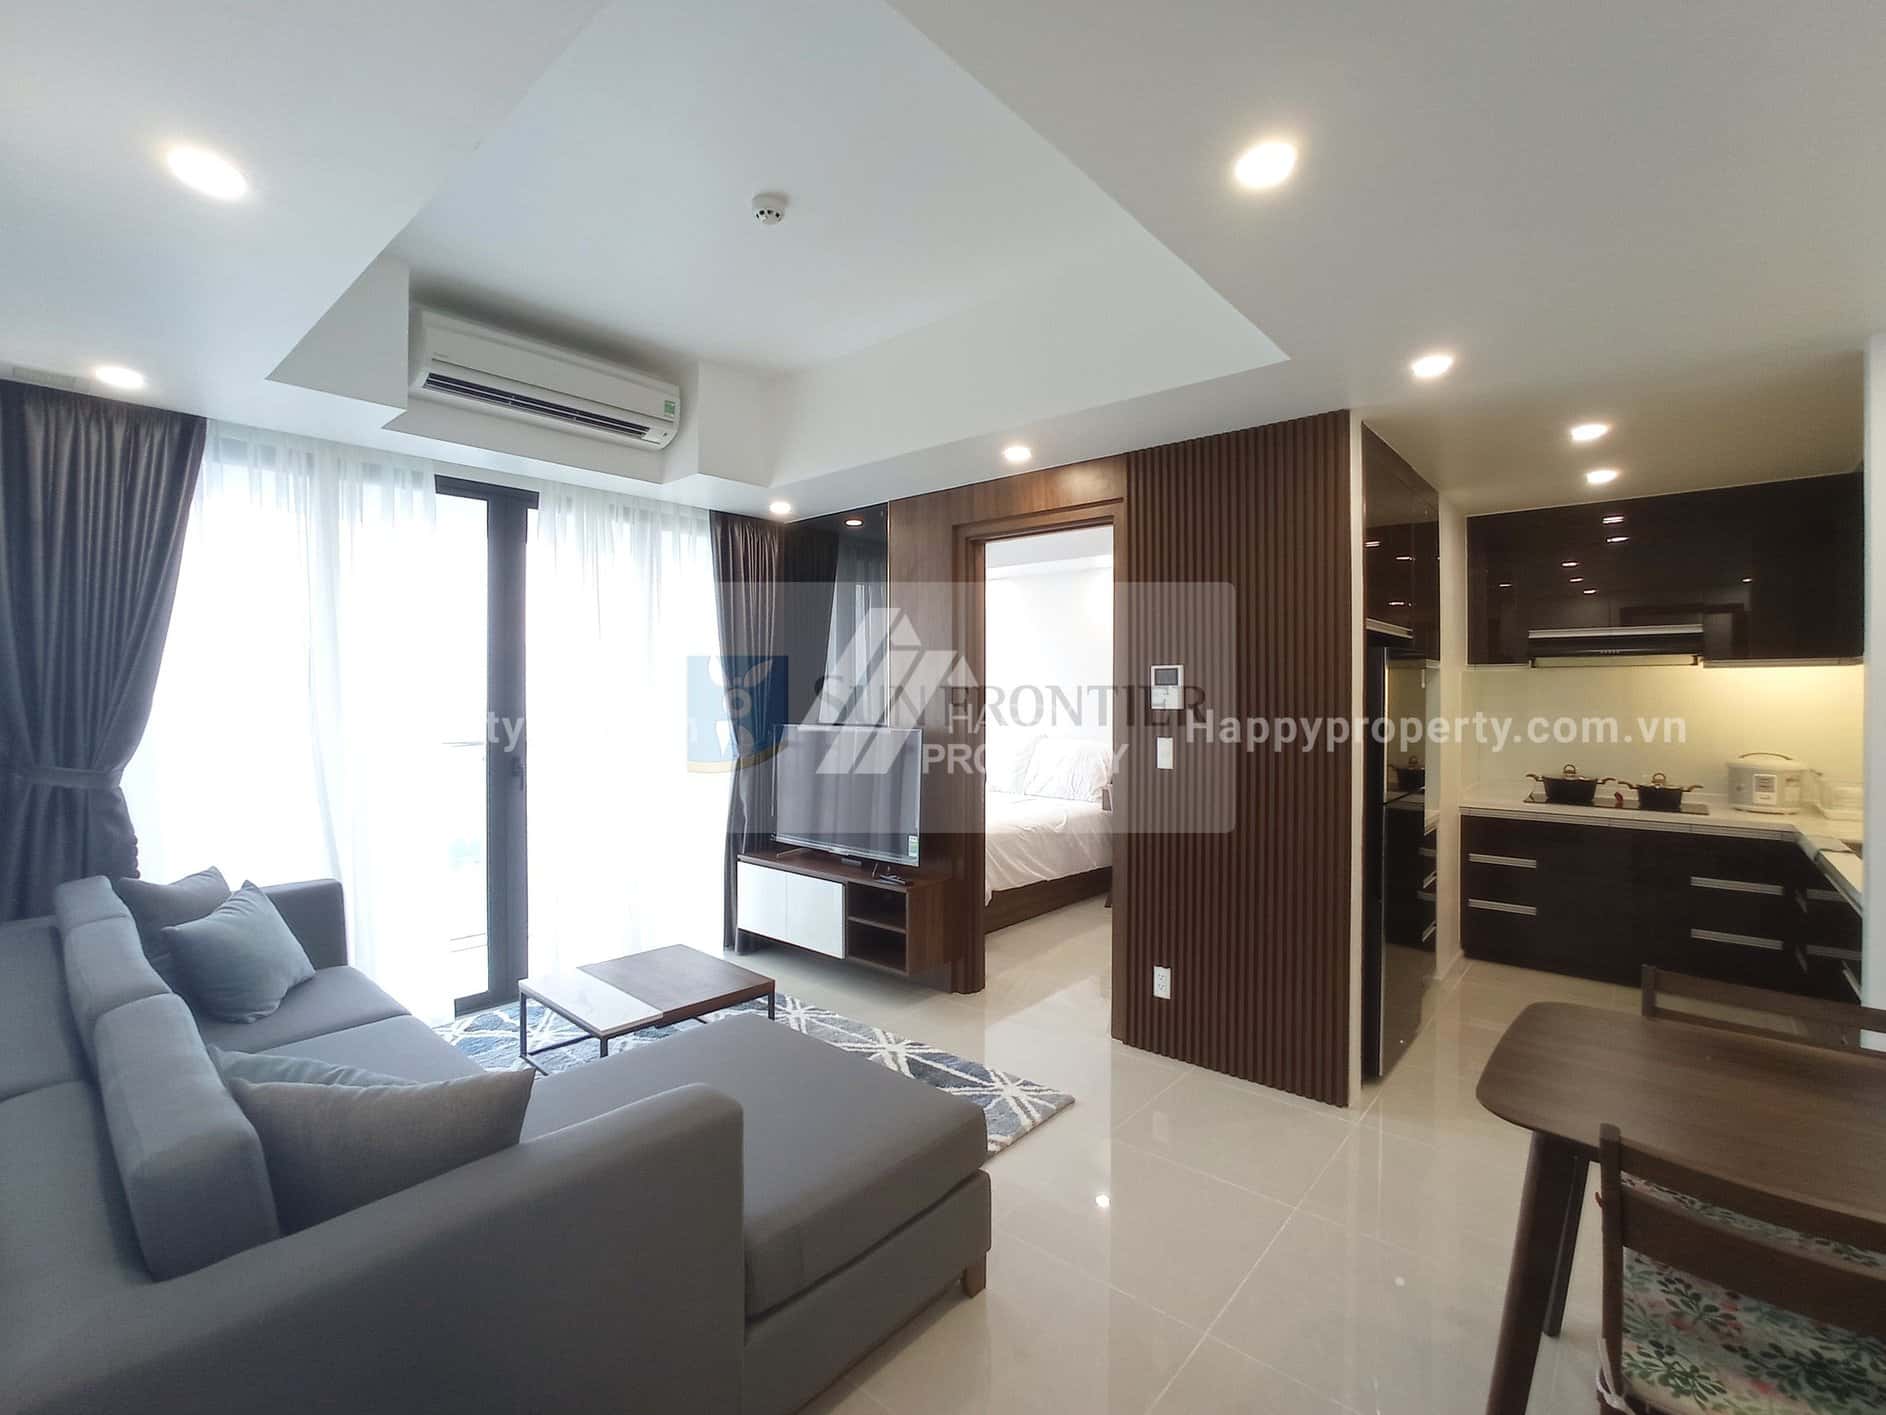 2 Bedrooms Elegant Hiyori Apartment For Rent – HRR21